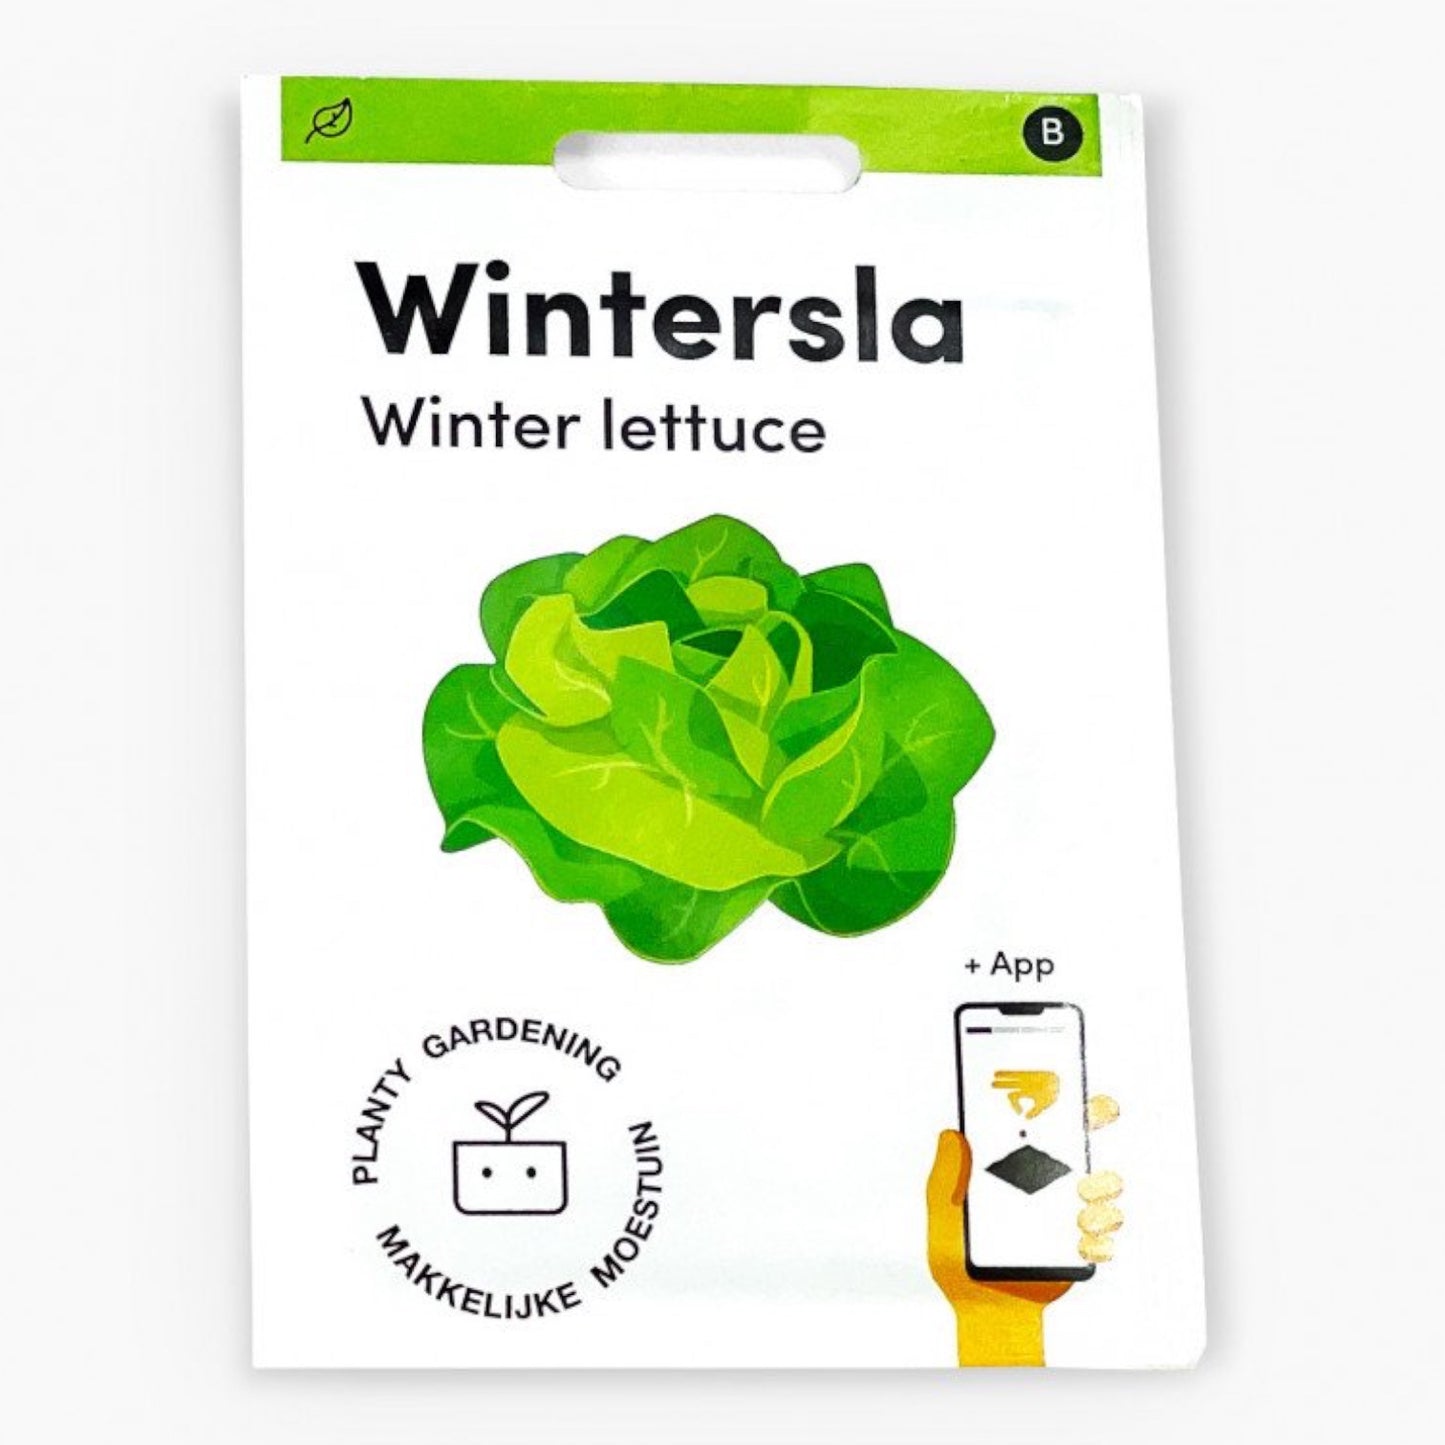 Winter lettuce